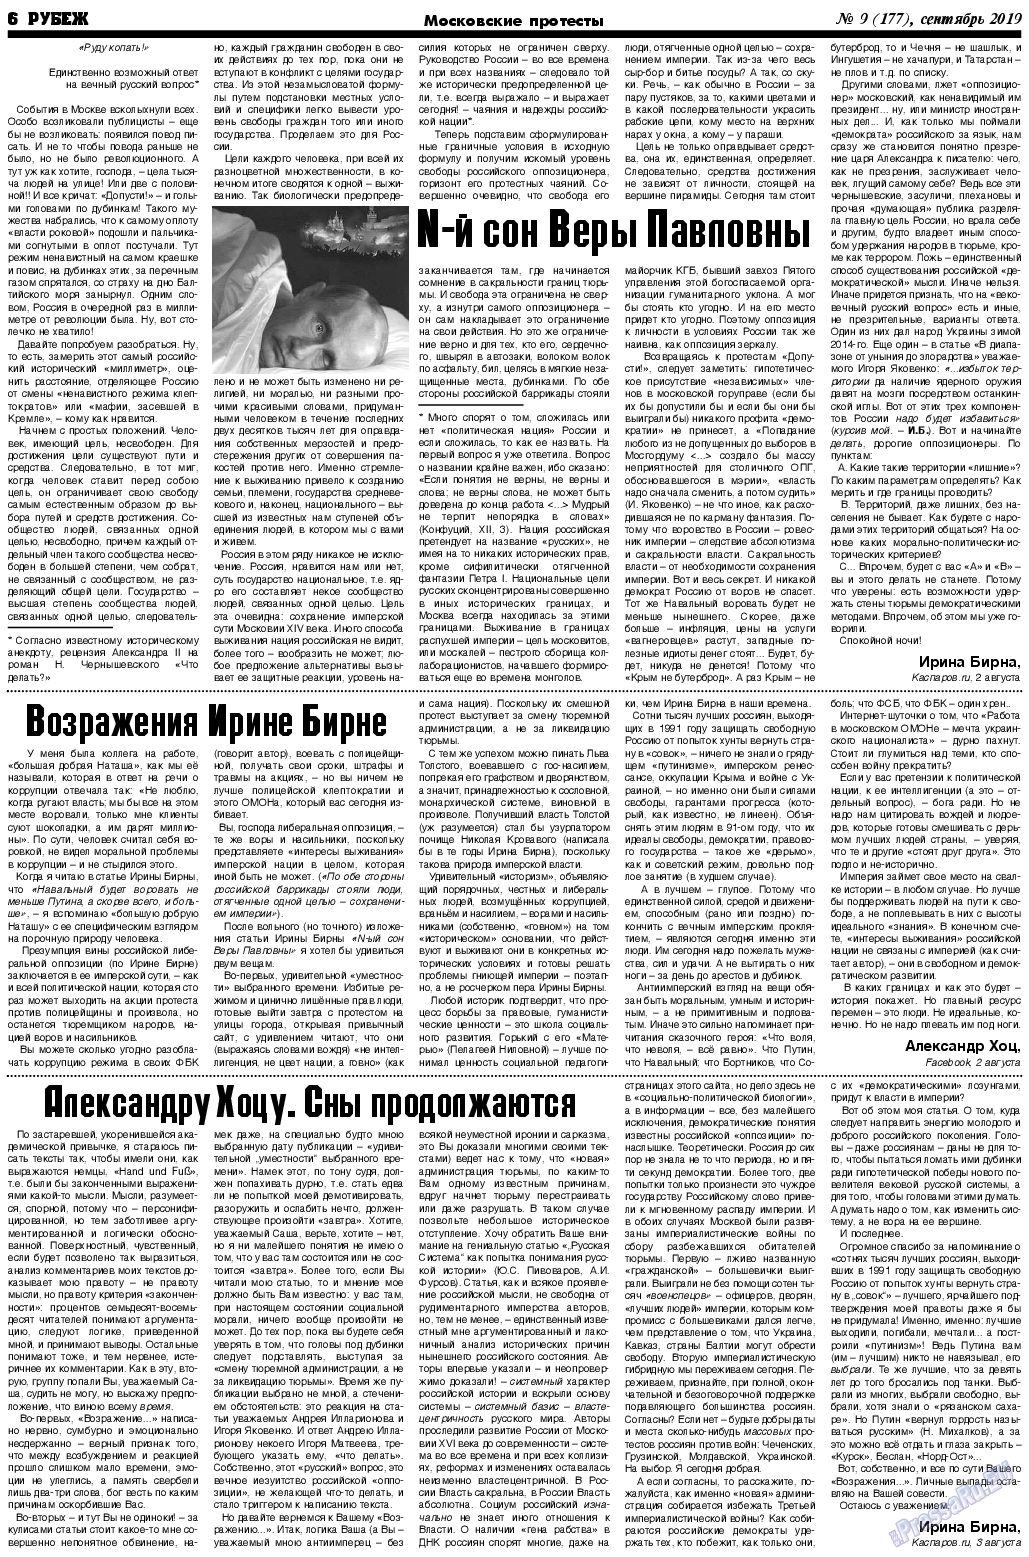 Рубеж, газета. 2019 №9 стр.6